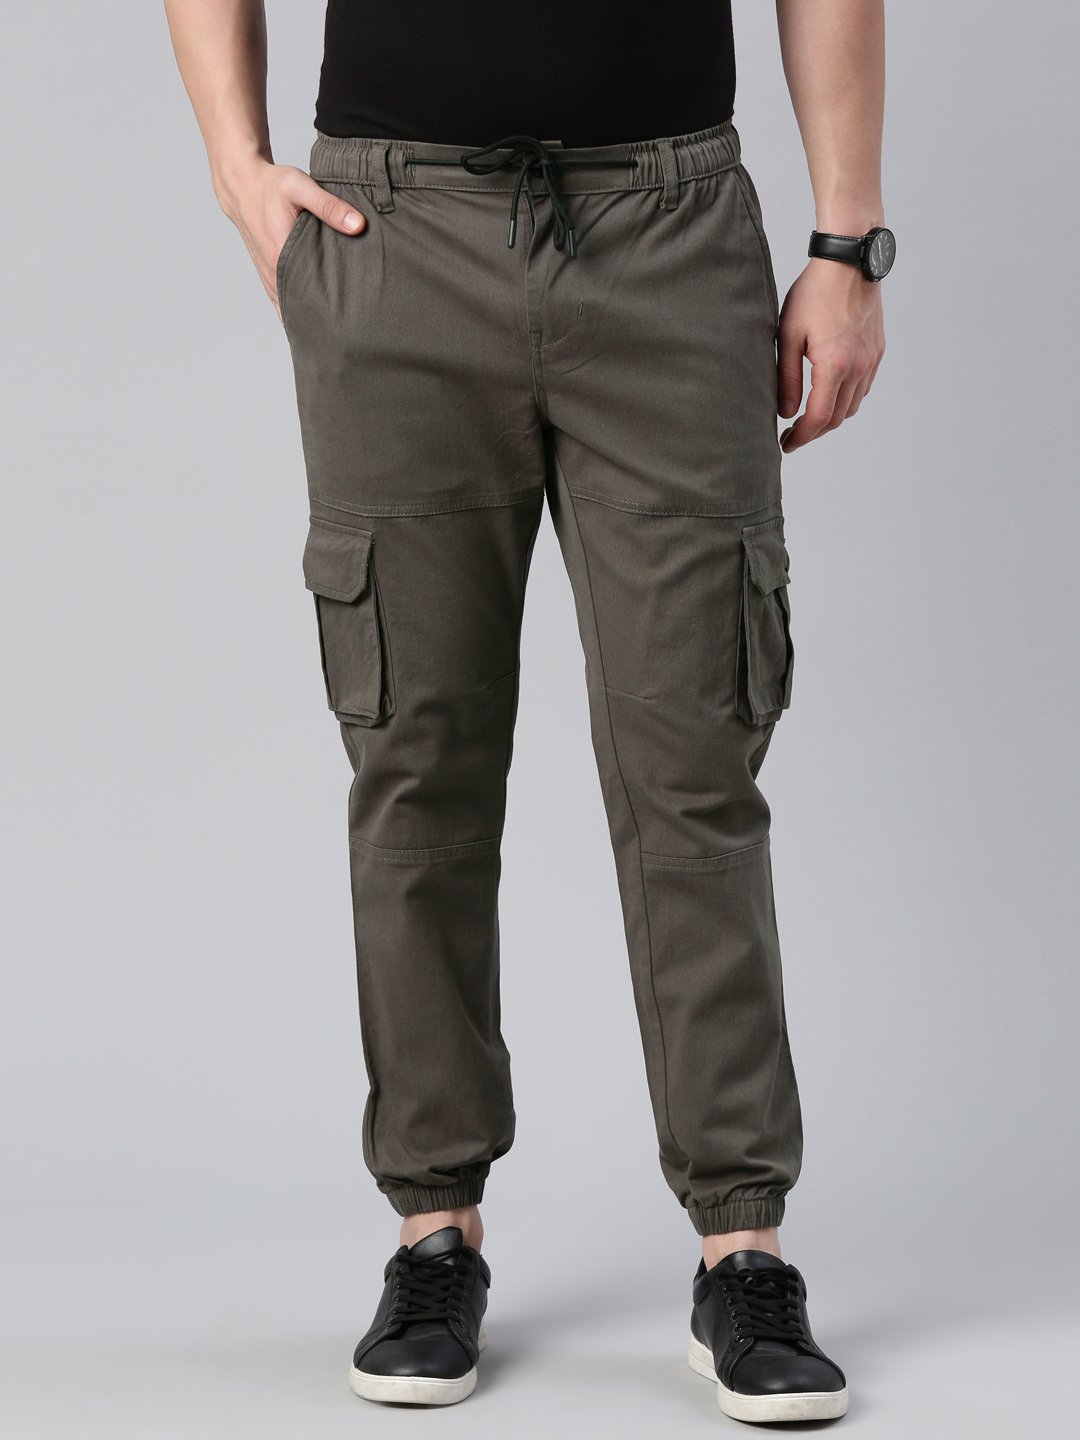 New DuluthFlex Fire Hose Slim Fit Cargo Pants 32 x 34 | Slim fit cargo pants,  Cargo pants, Slim fit